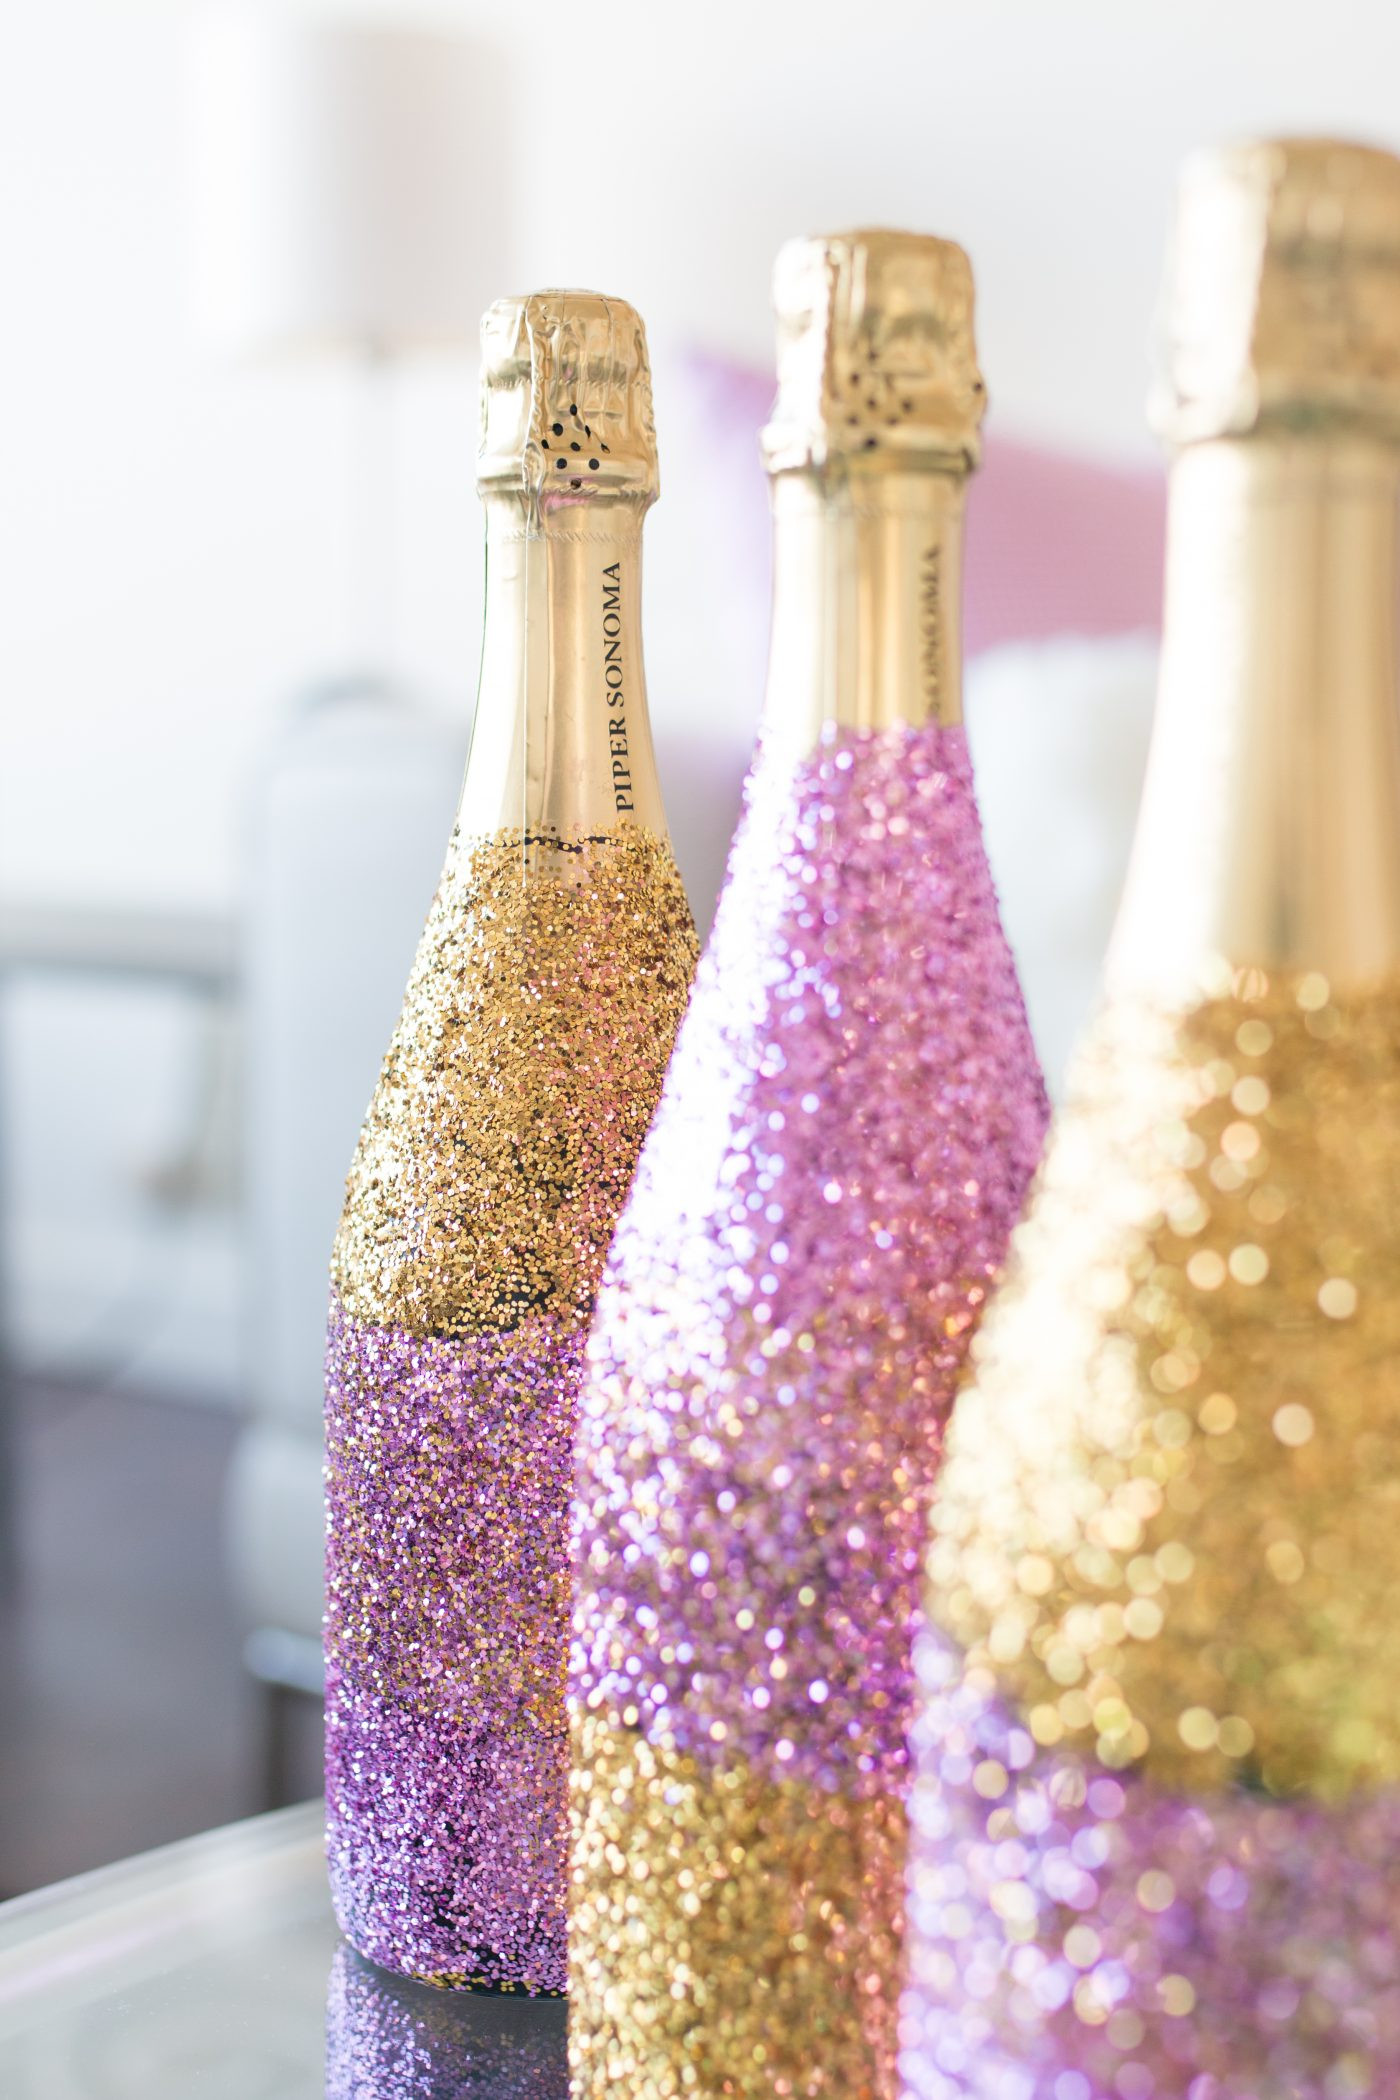 Best ideas about Glitter Bottle DIY
. Save or Pin DIY Glitter Ombré Champagne Bottle Now.